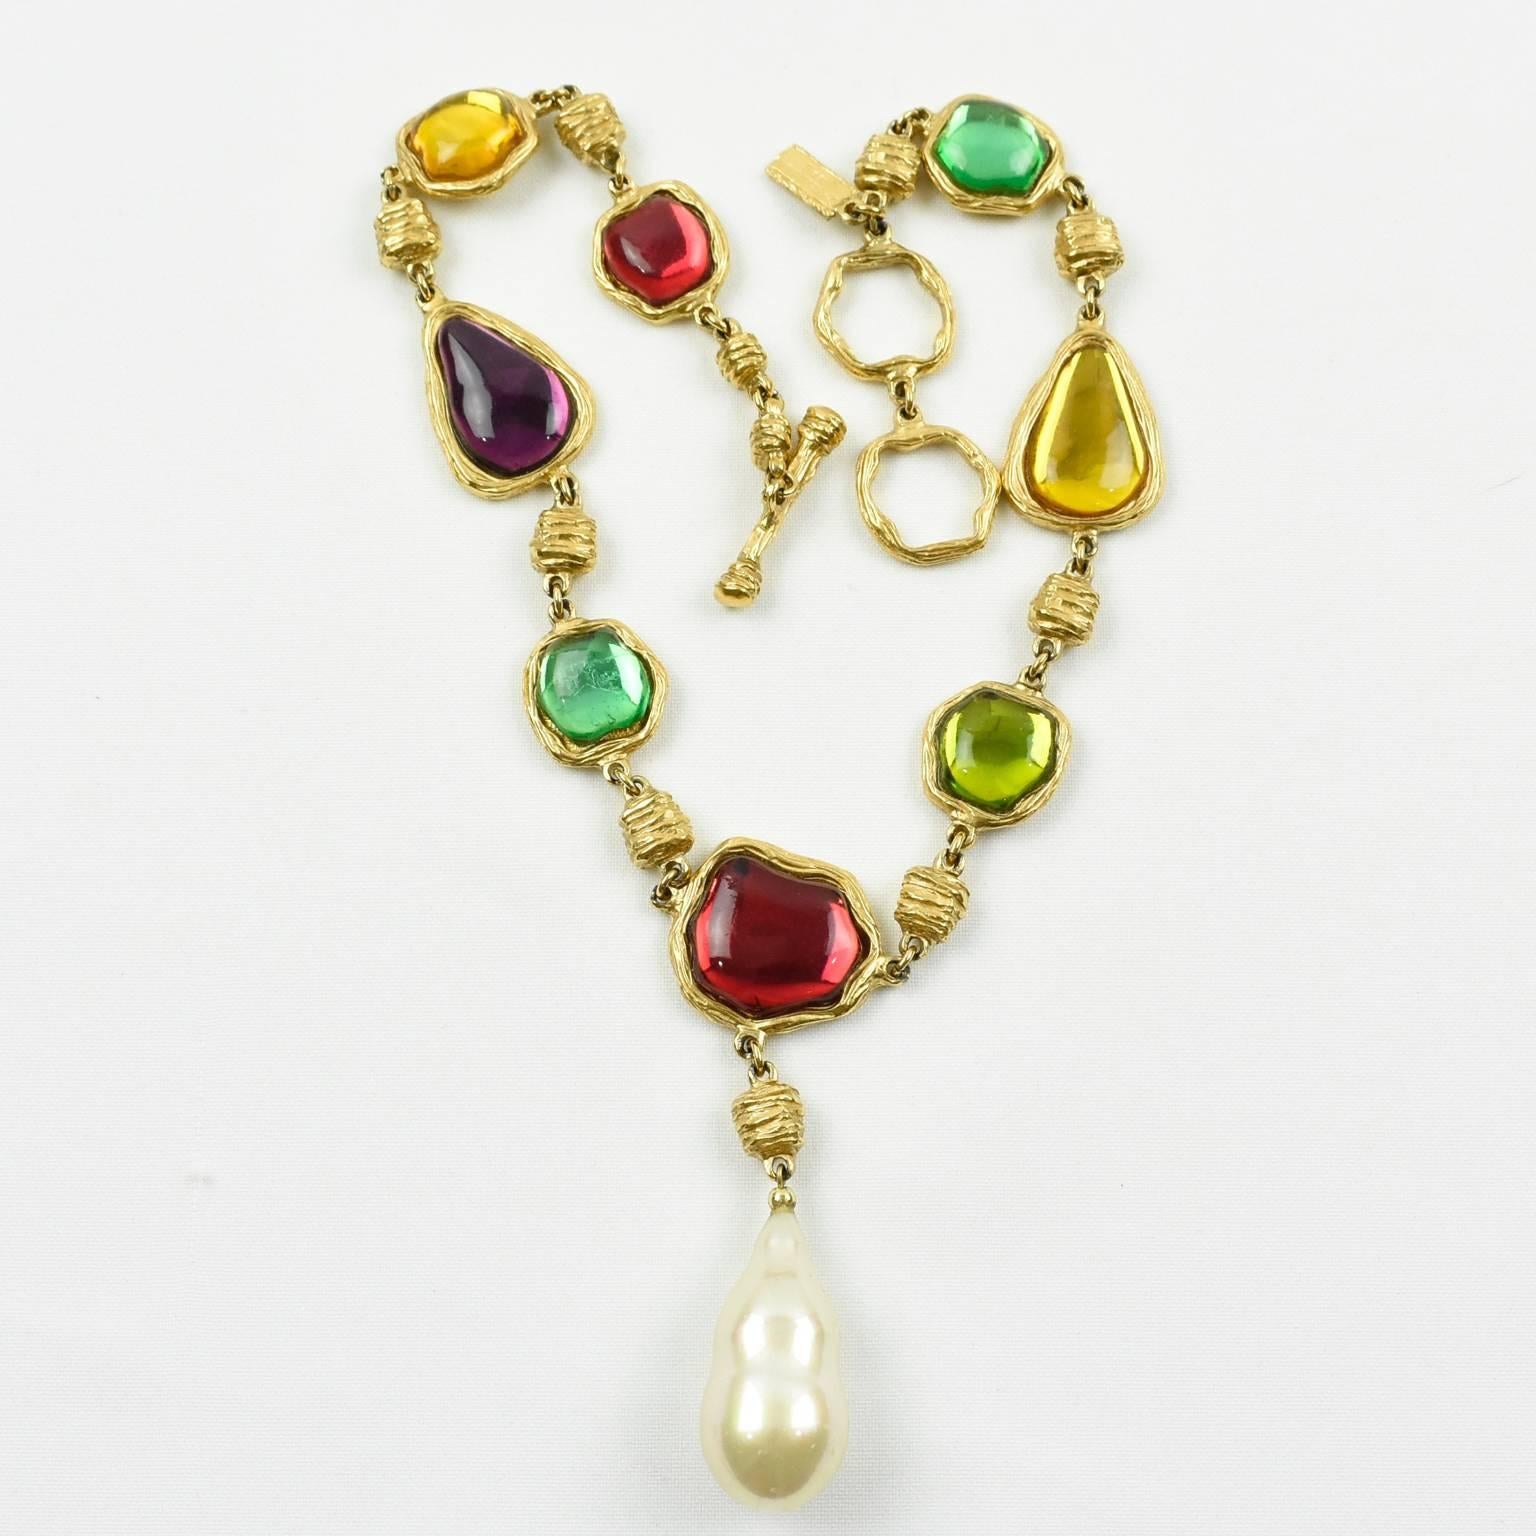 Women's Charles Jourdan Paris Rare Gilt Metal Jeweled Necklace Multicolor Rhinestones